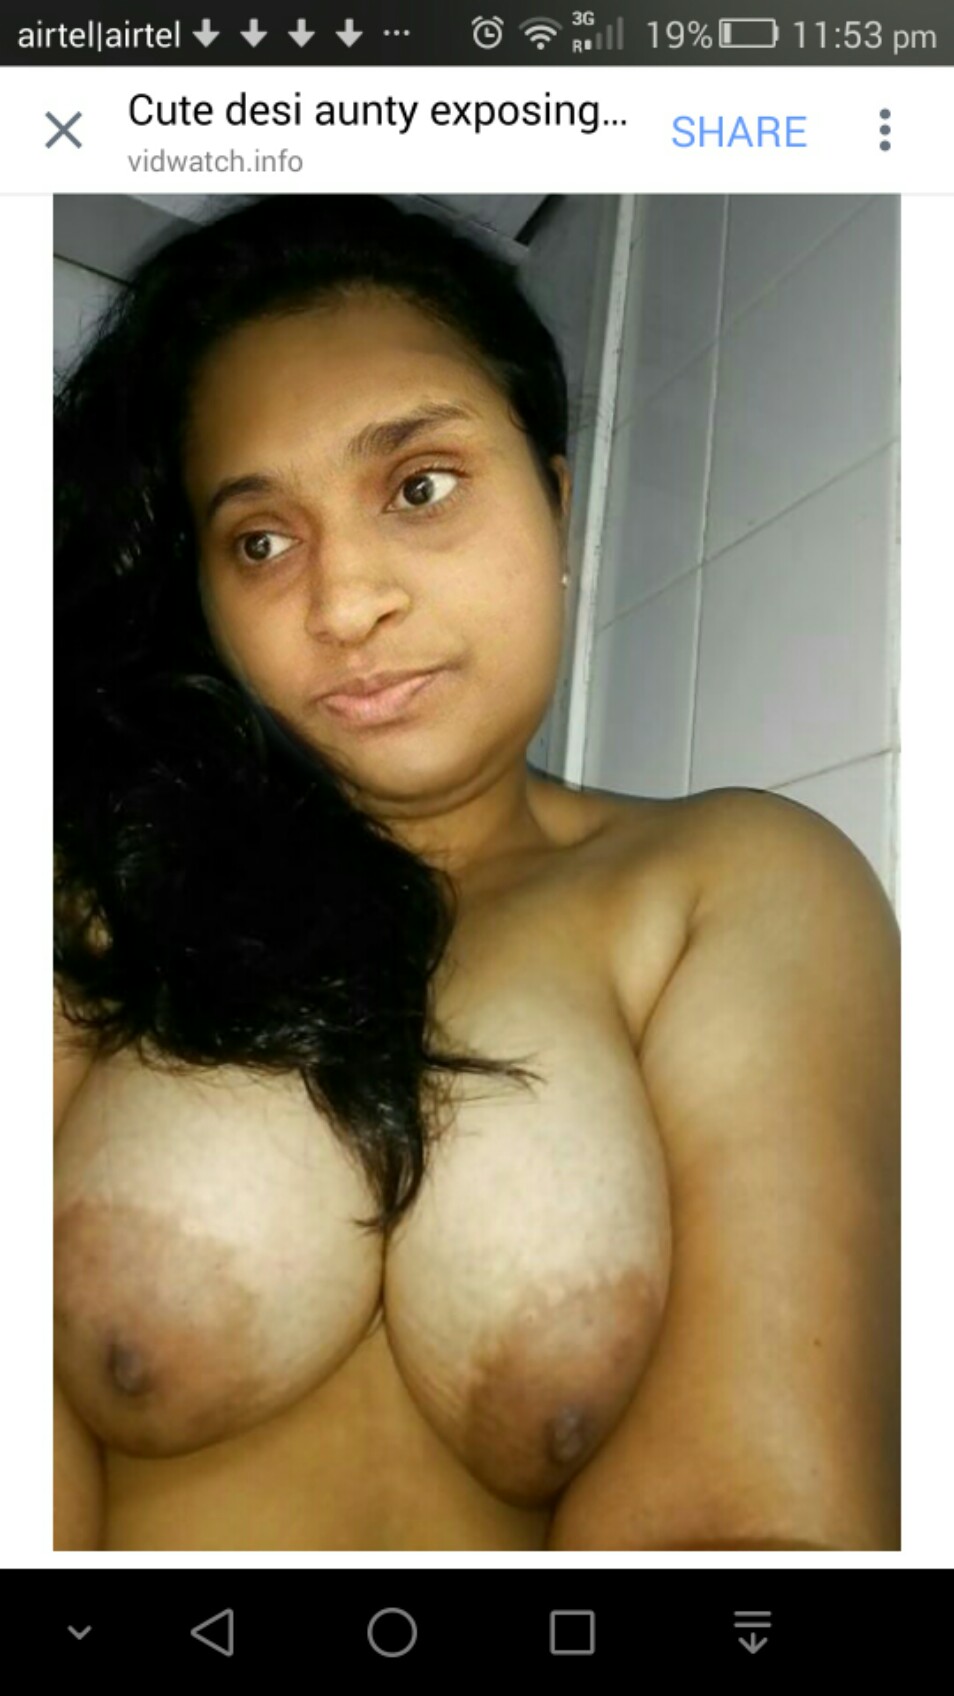 Mallu girl nudes showing boobs - AdultImgShare